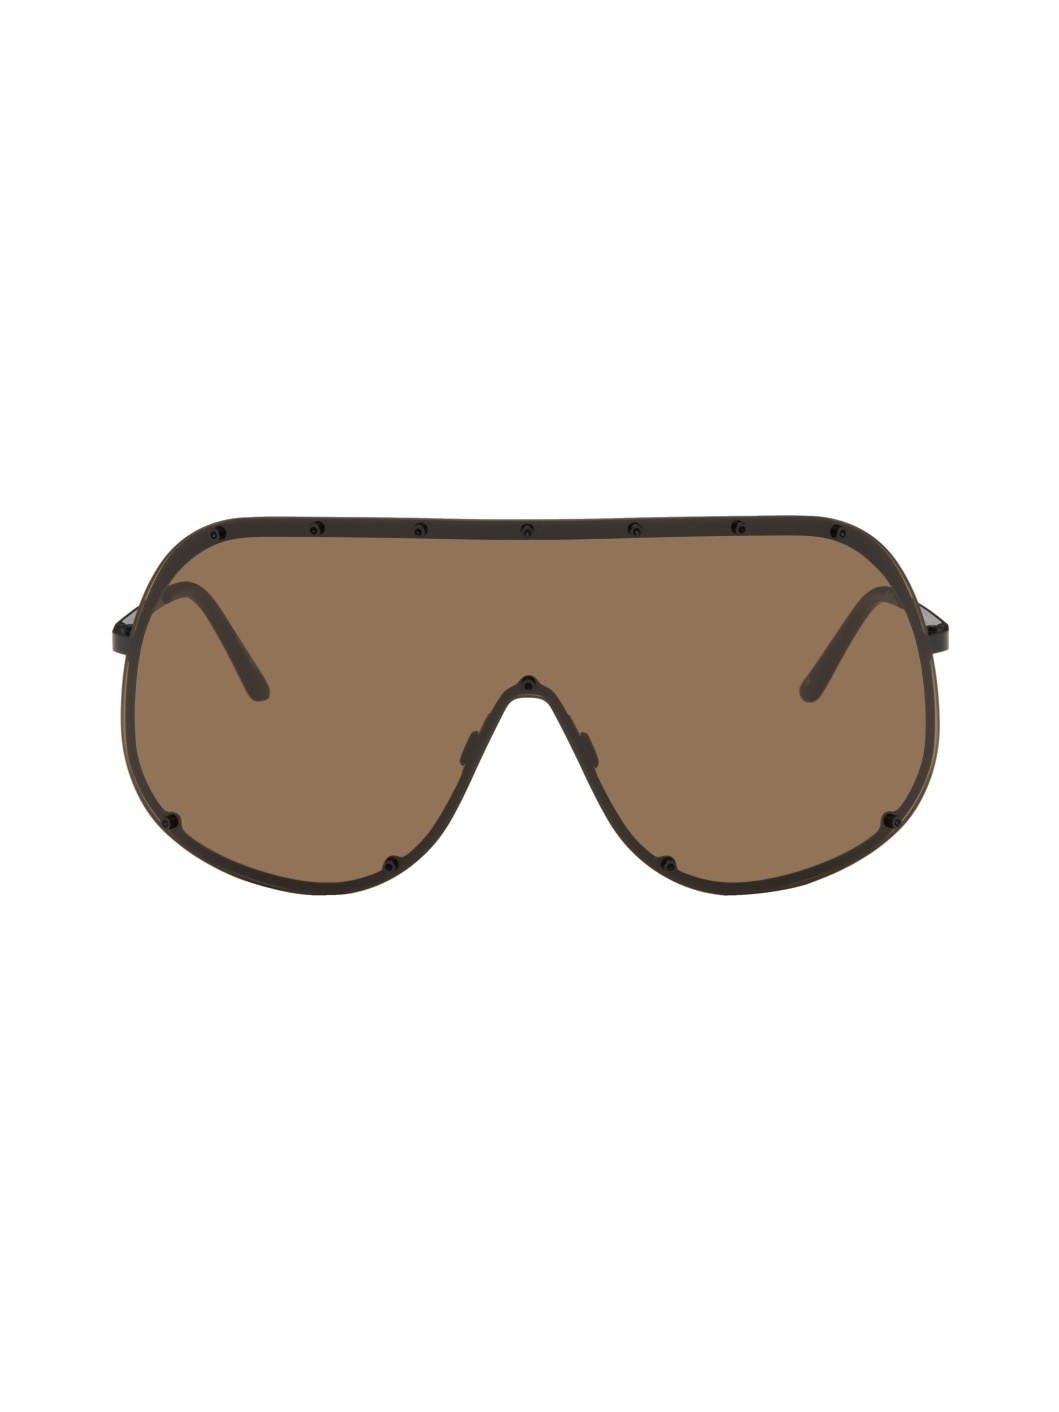 Black & Brown Shield Sunglasses - 1